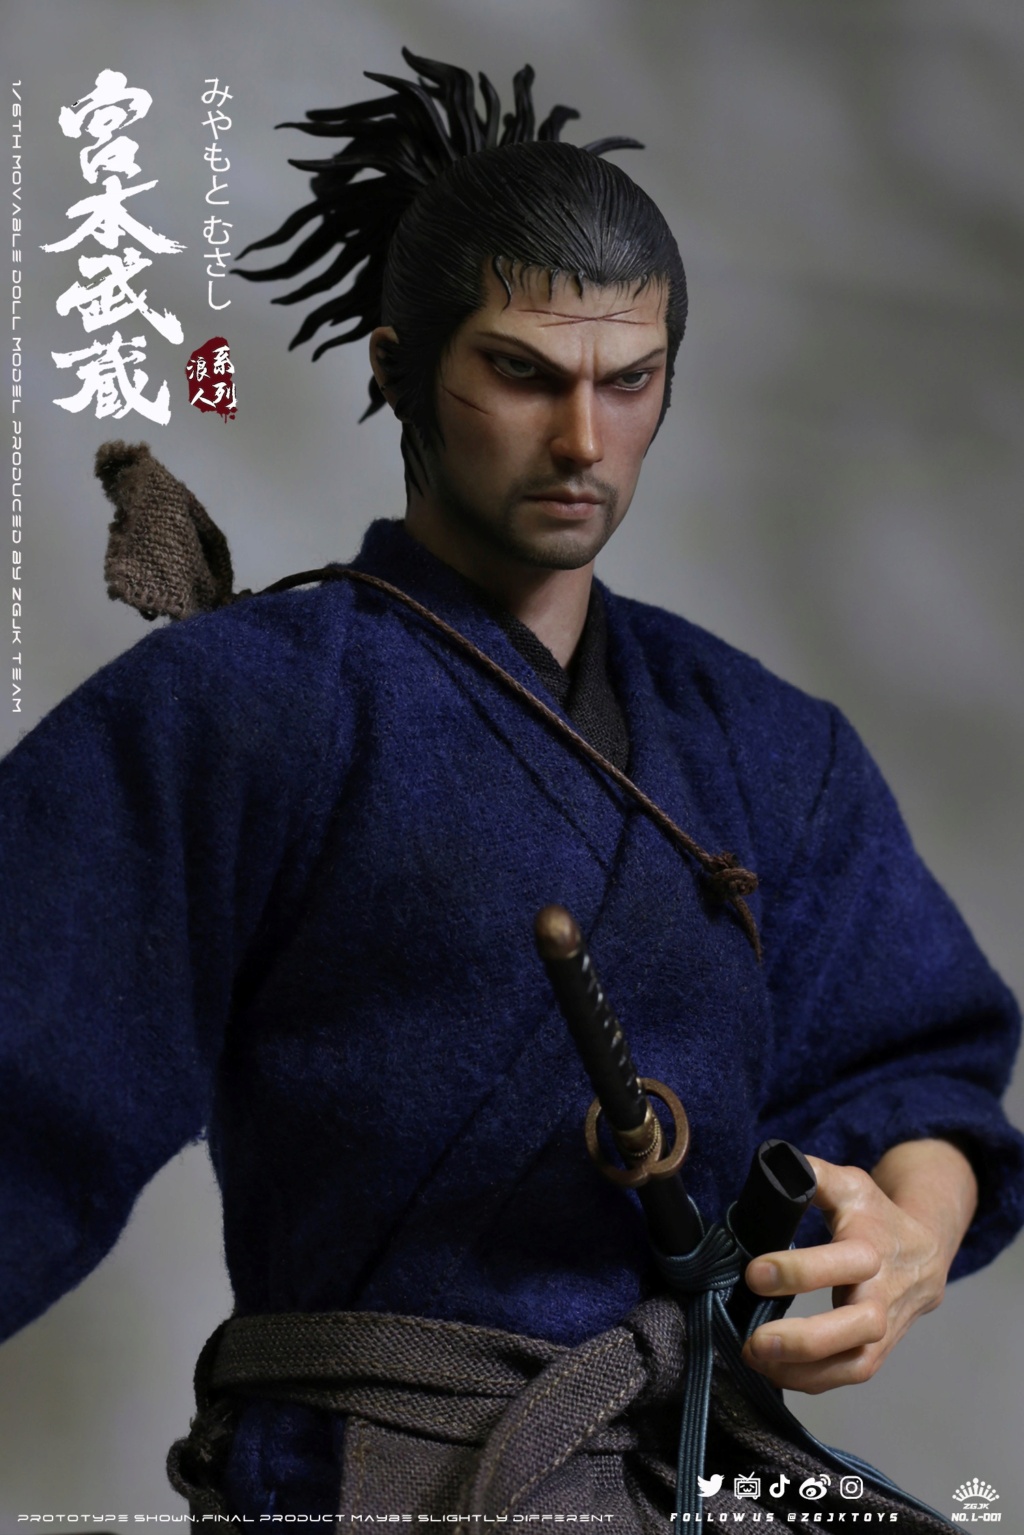 Anime - MEW PRODUCT: ZGJKTOYS: Ronin Series 1/6 Miyamoto Musashi Action Figure ------ Updated Official Figure 4b025110